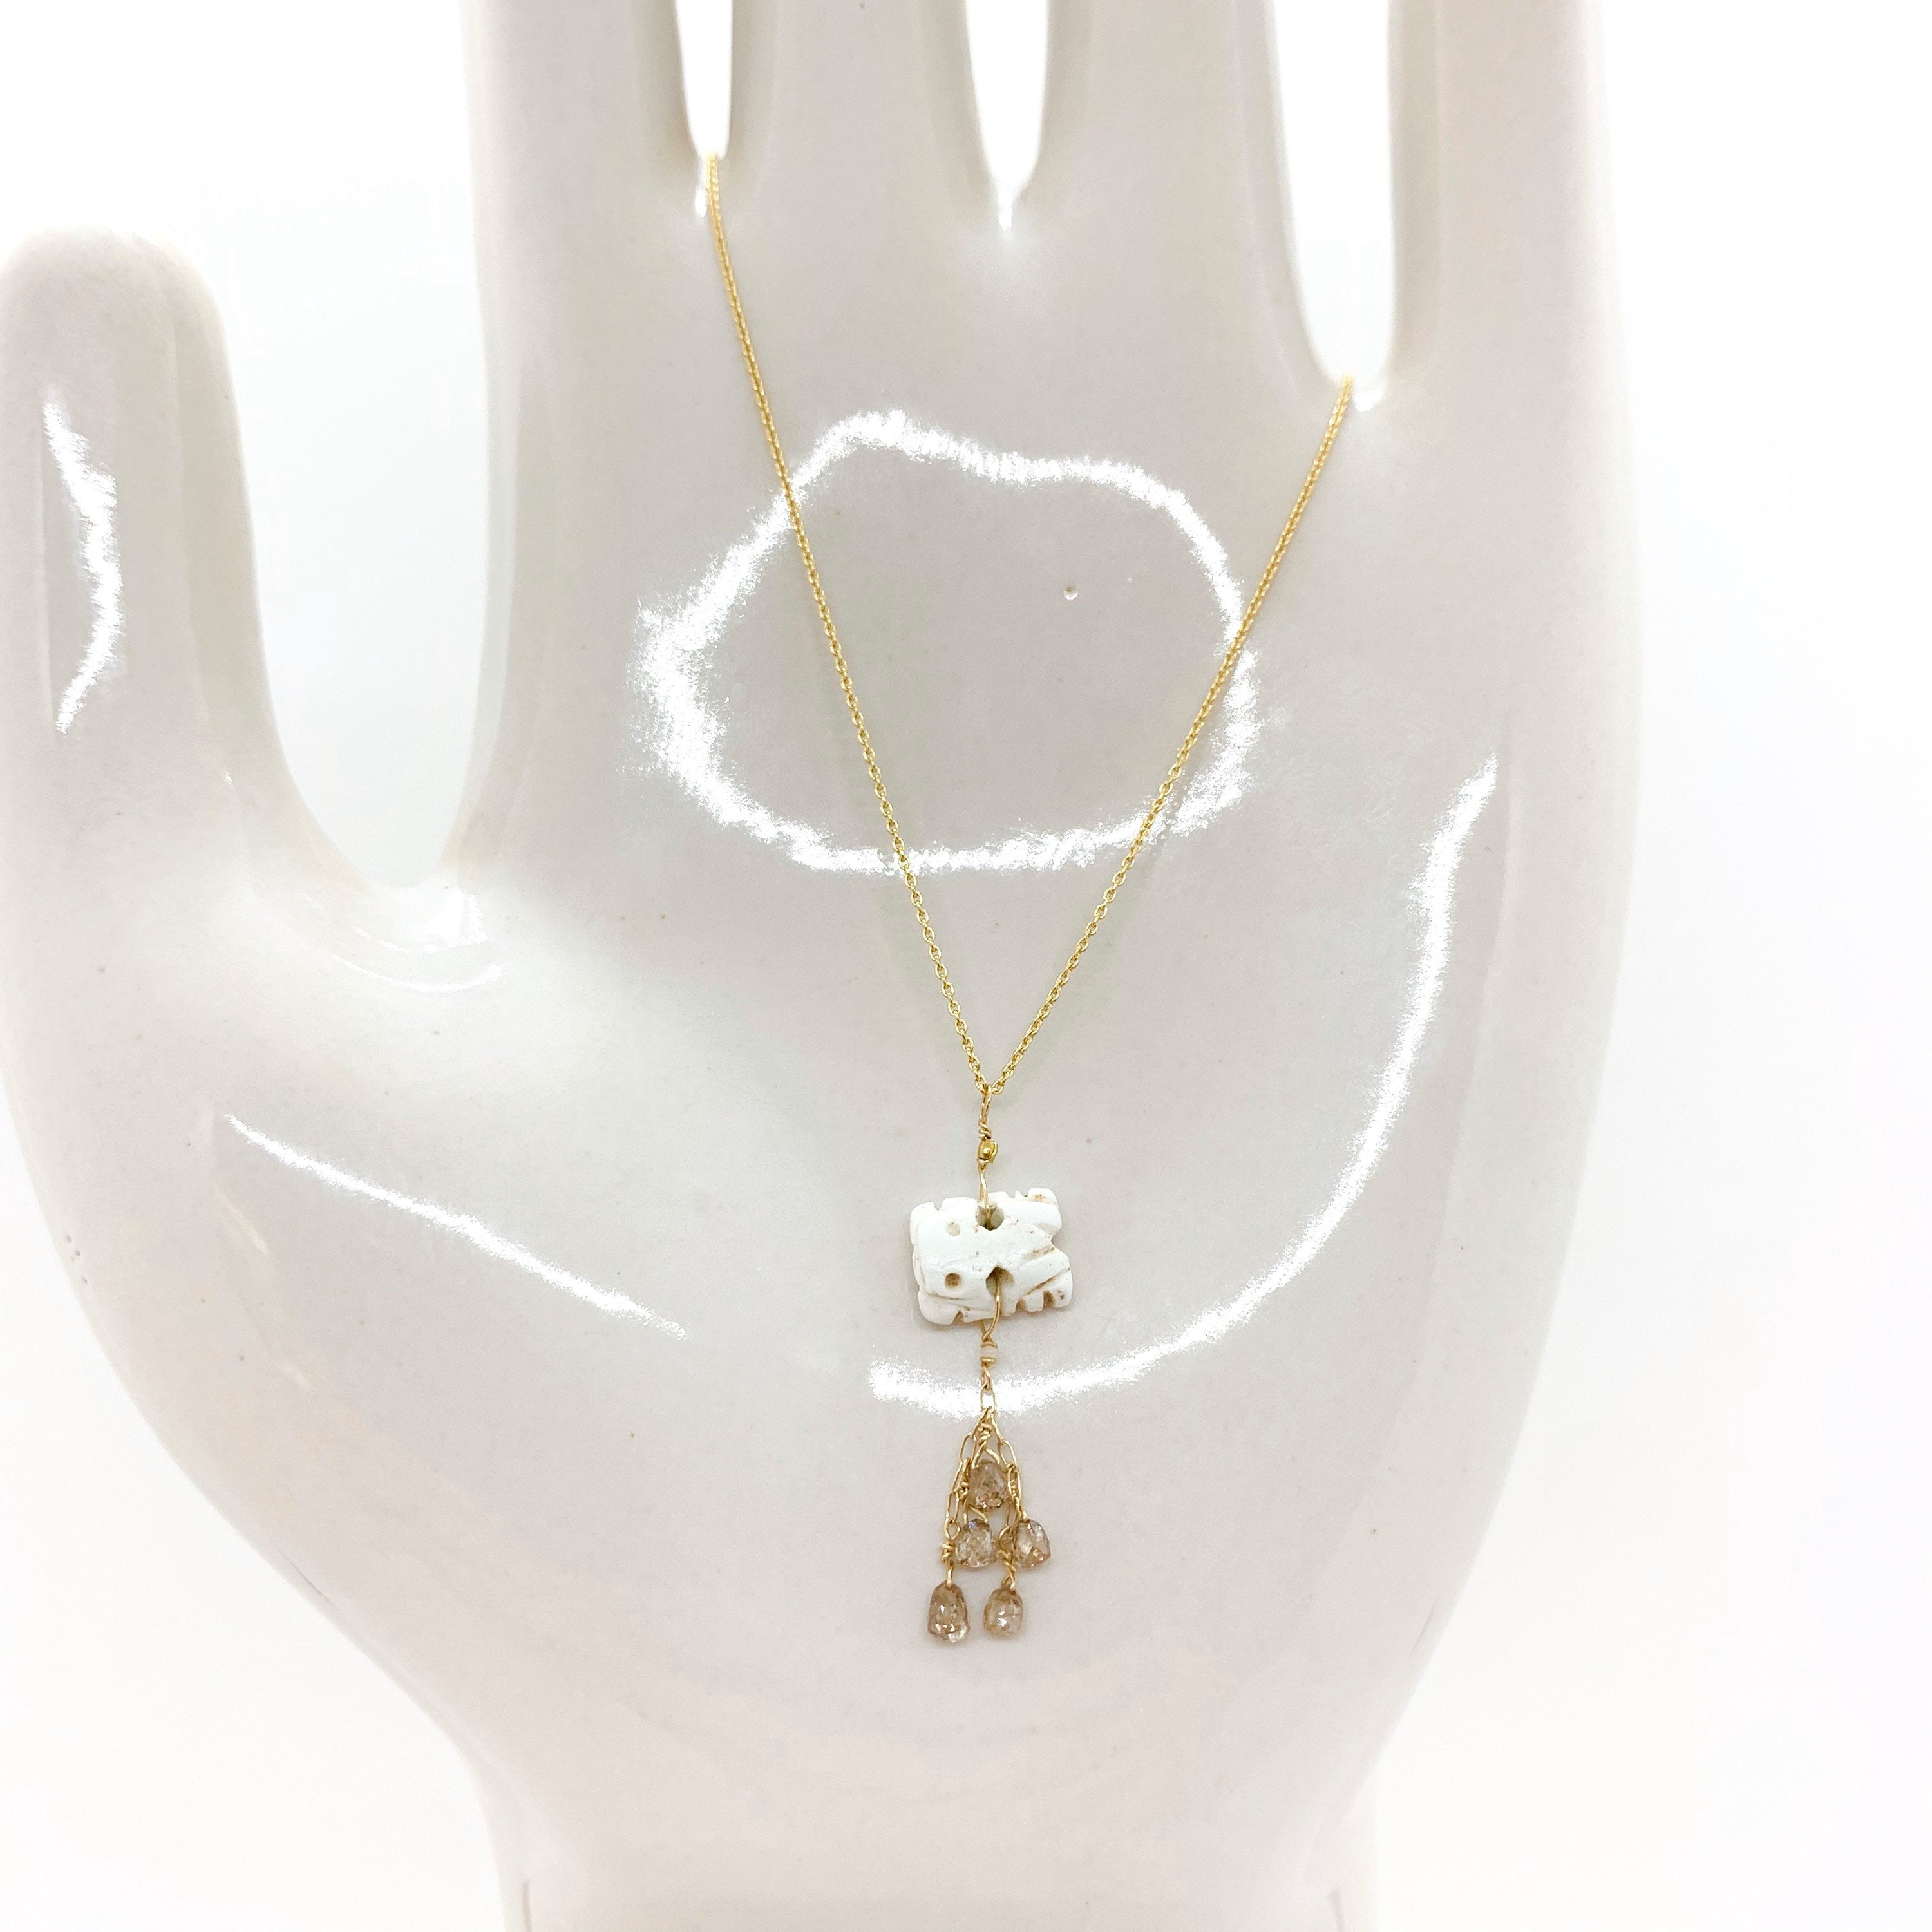 Pre-Columbian Bone Necklace - Antique Italian Bead - Frog Charm Necklace - Necklace For Women - White Diamond Beads - Gem Stone Pendant